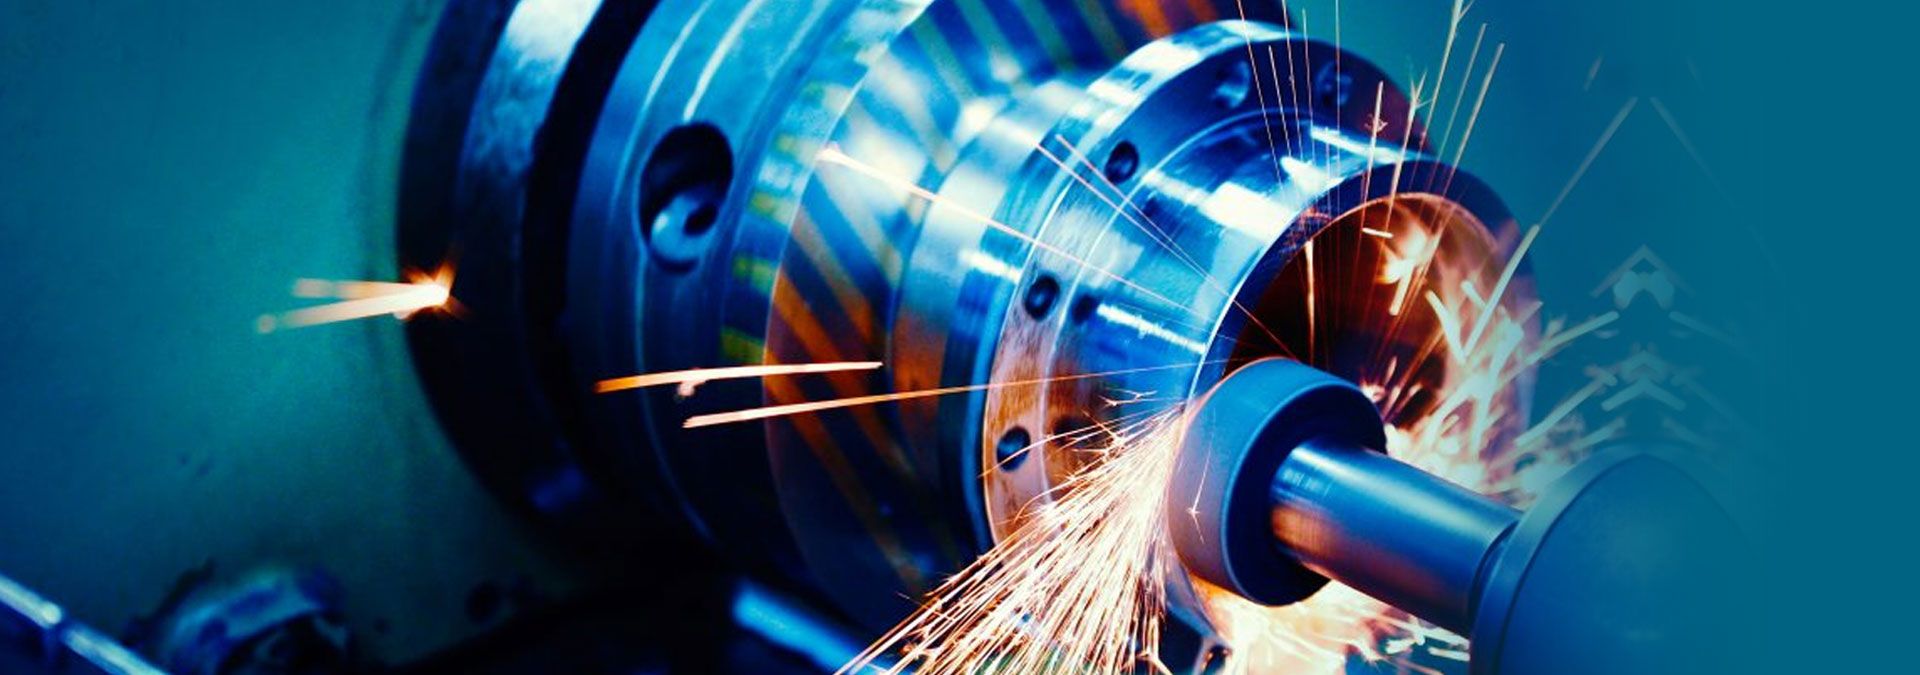 Sri Lanka Exports Development Board (EDB) - Base Metal Products